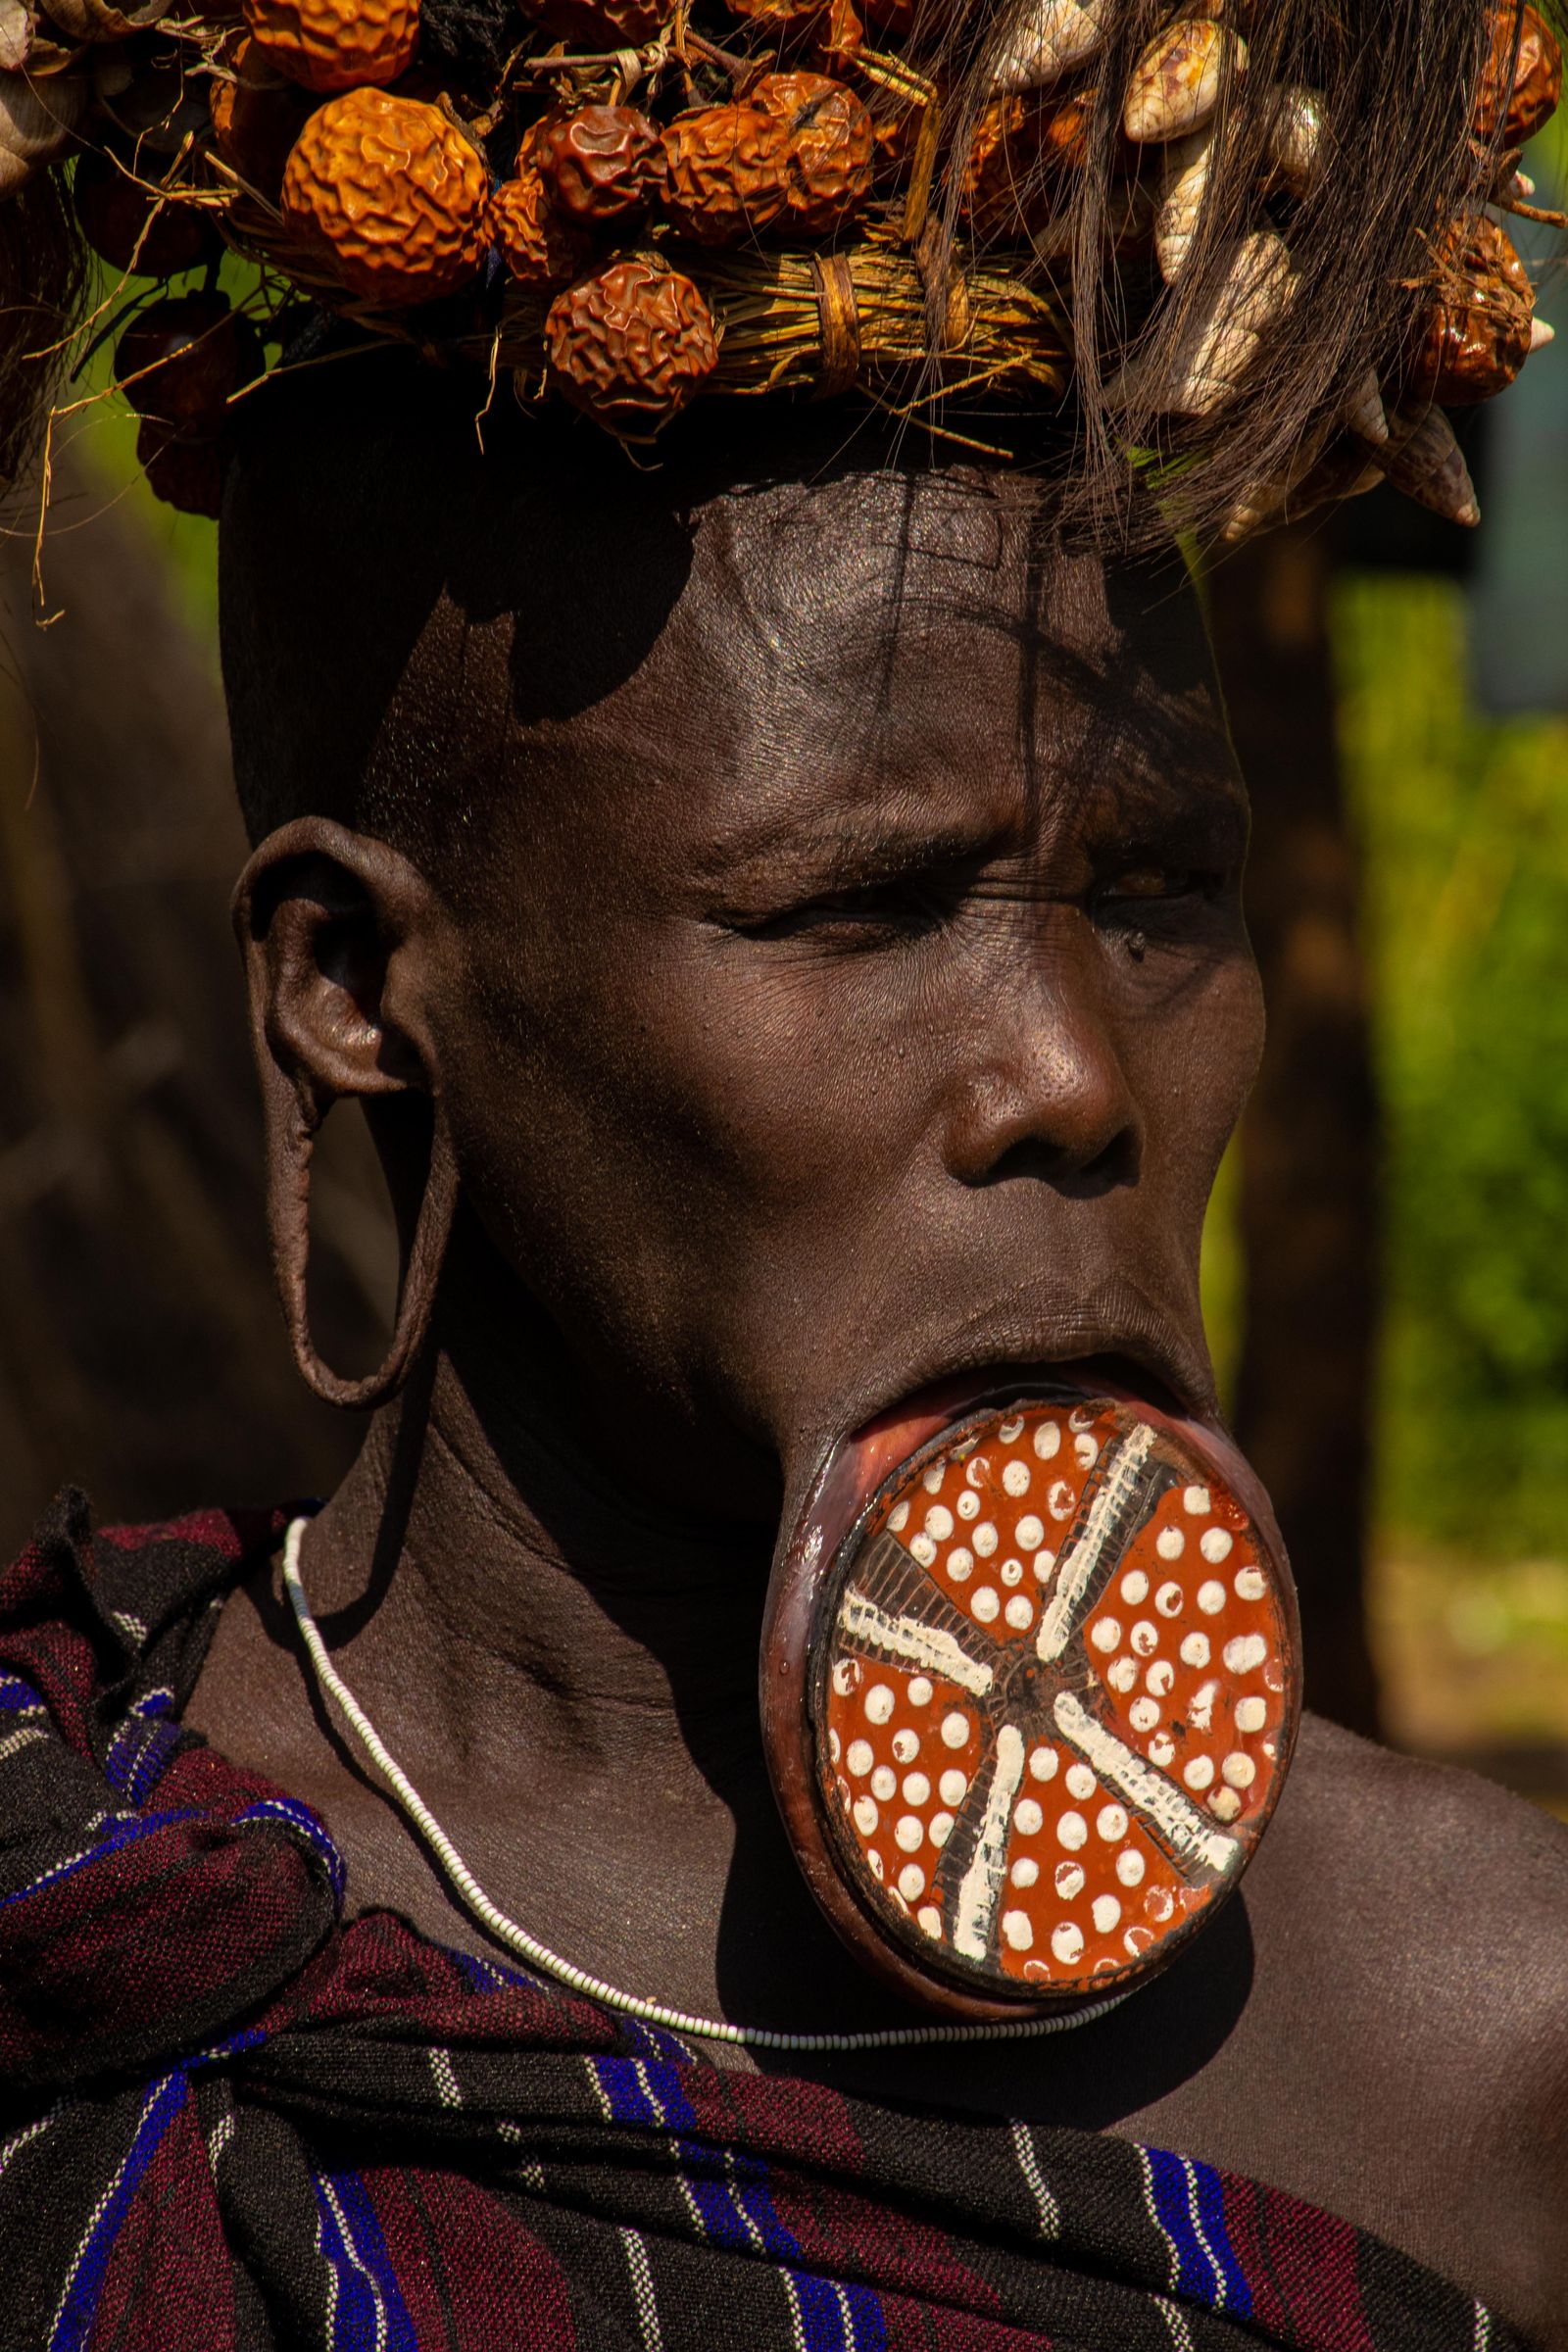 © Nwando Ebeledike - Elder in Mursi Tribe, Omo Valley, Ethiopia